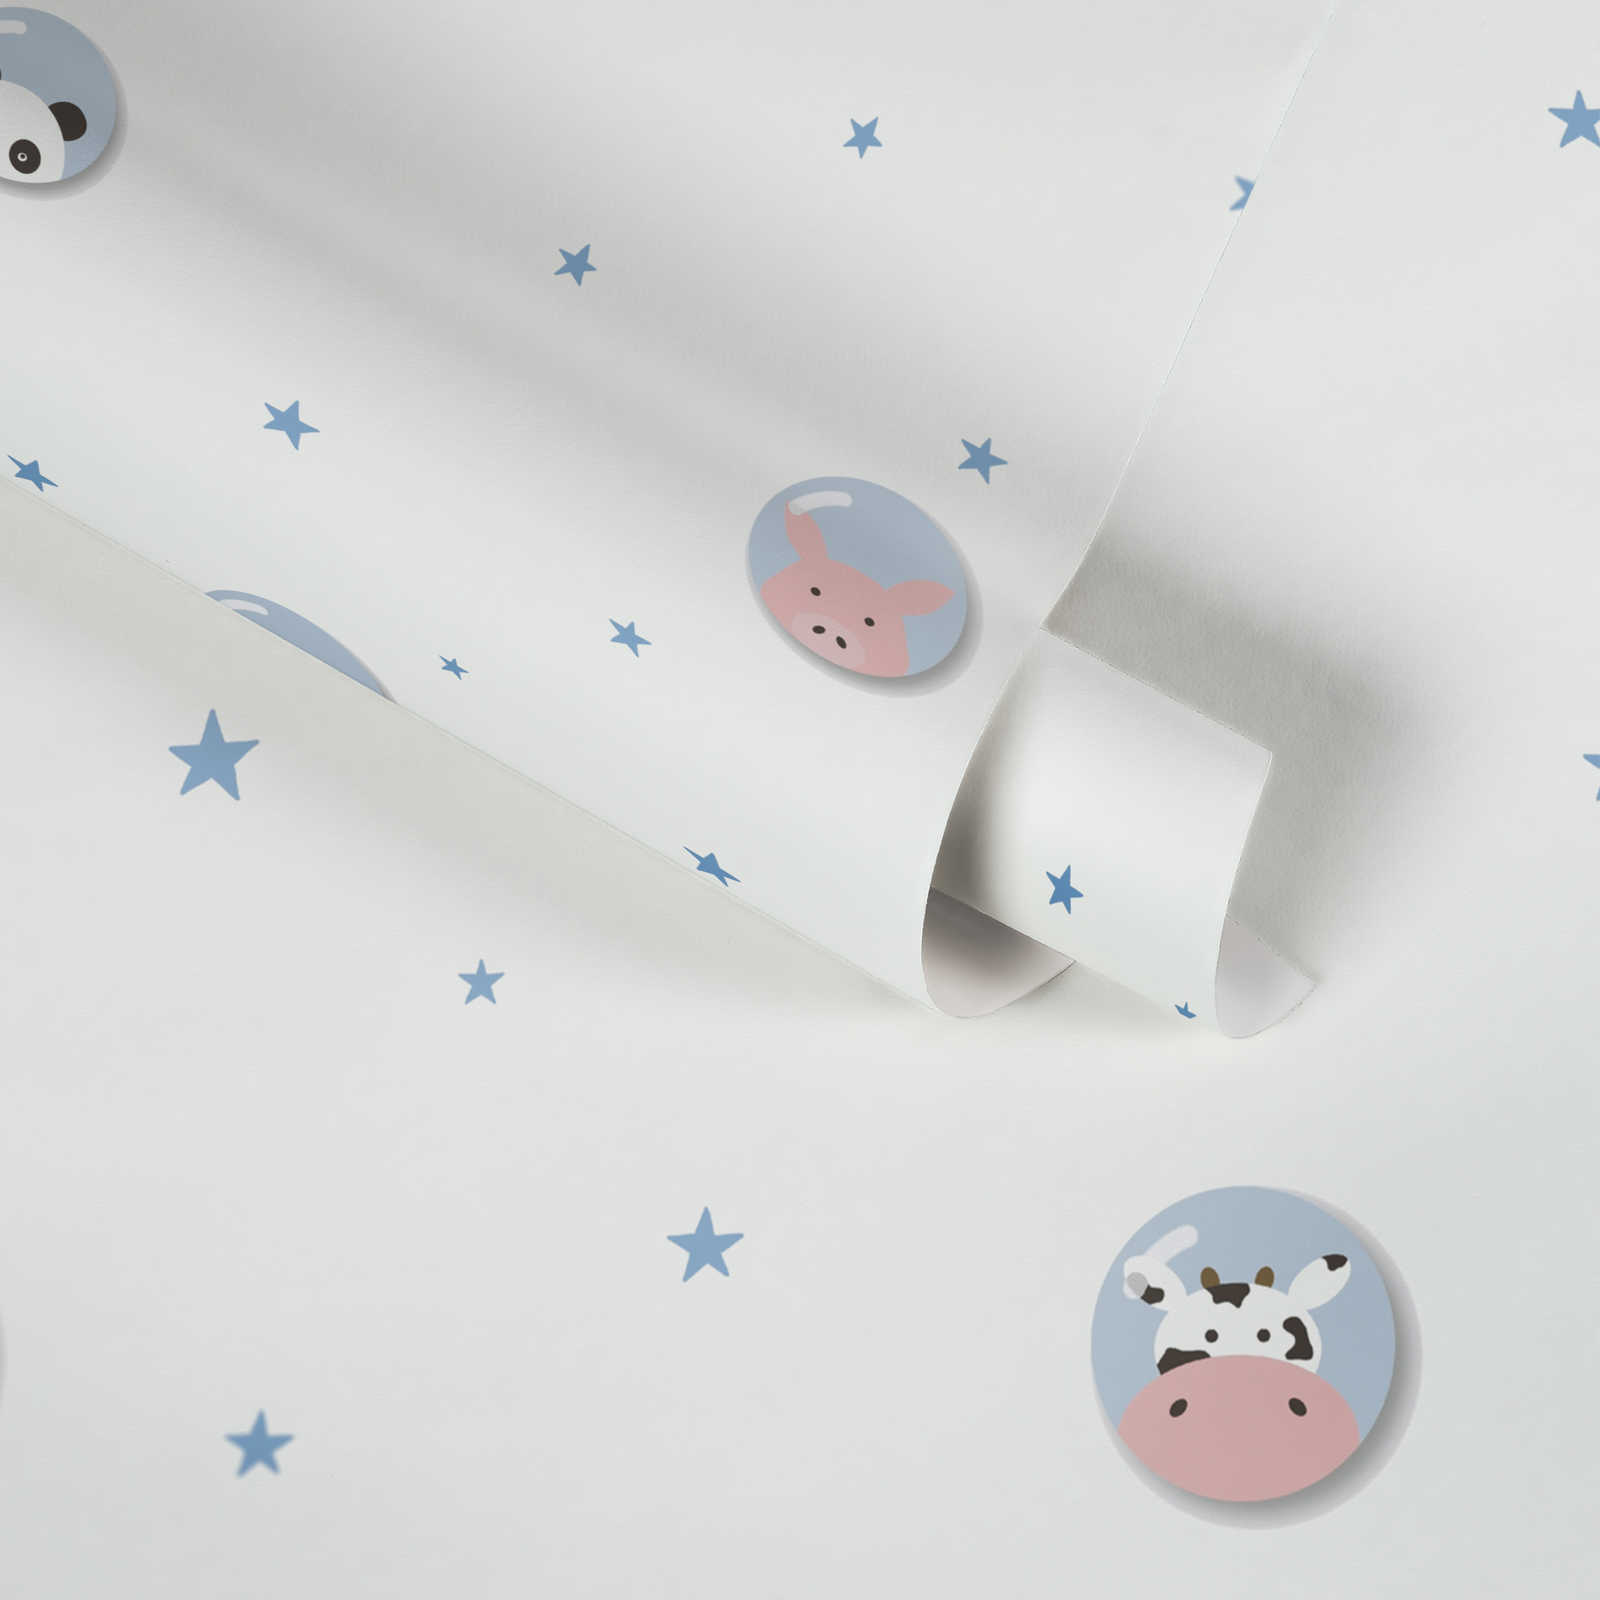             Nursery wallpaper animals & stars - blue, white, pink
        